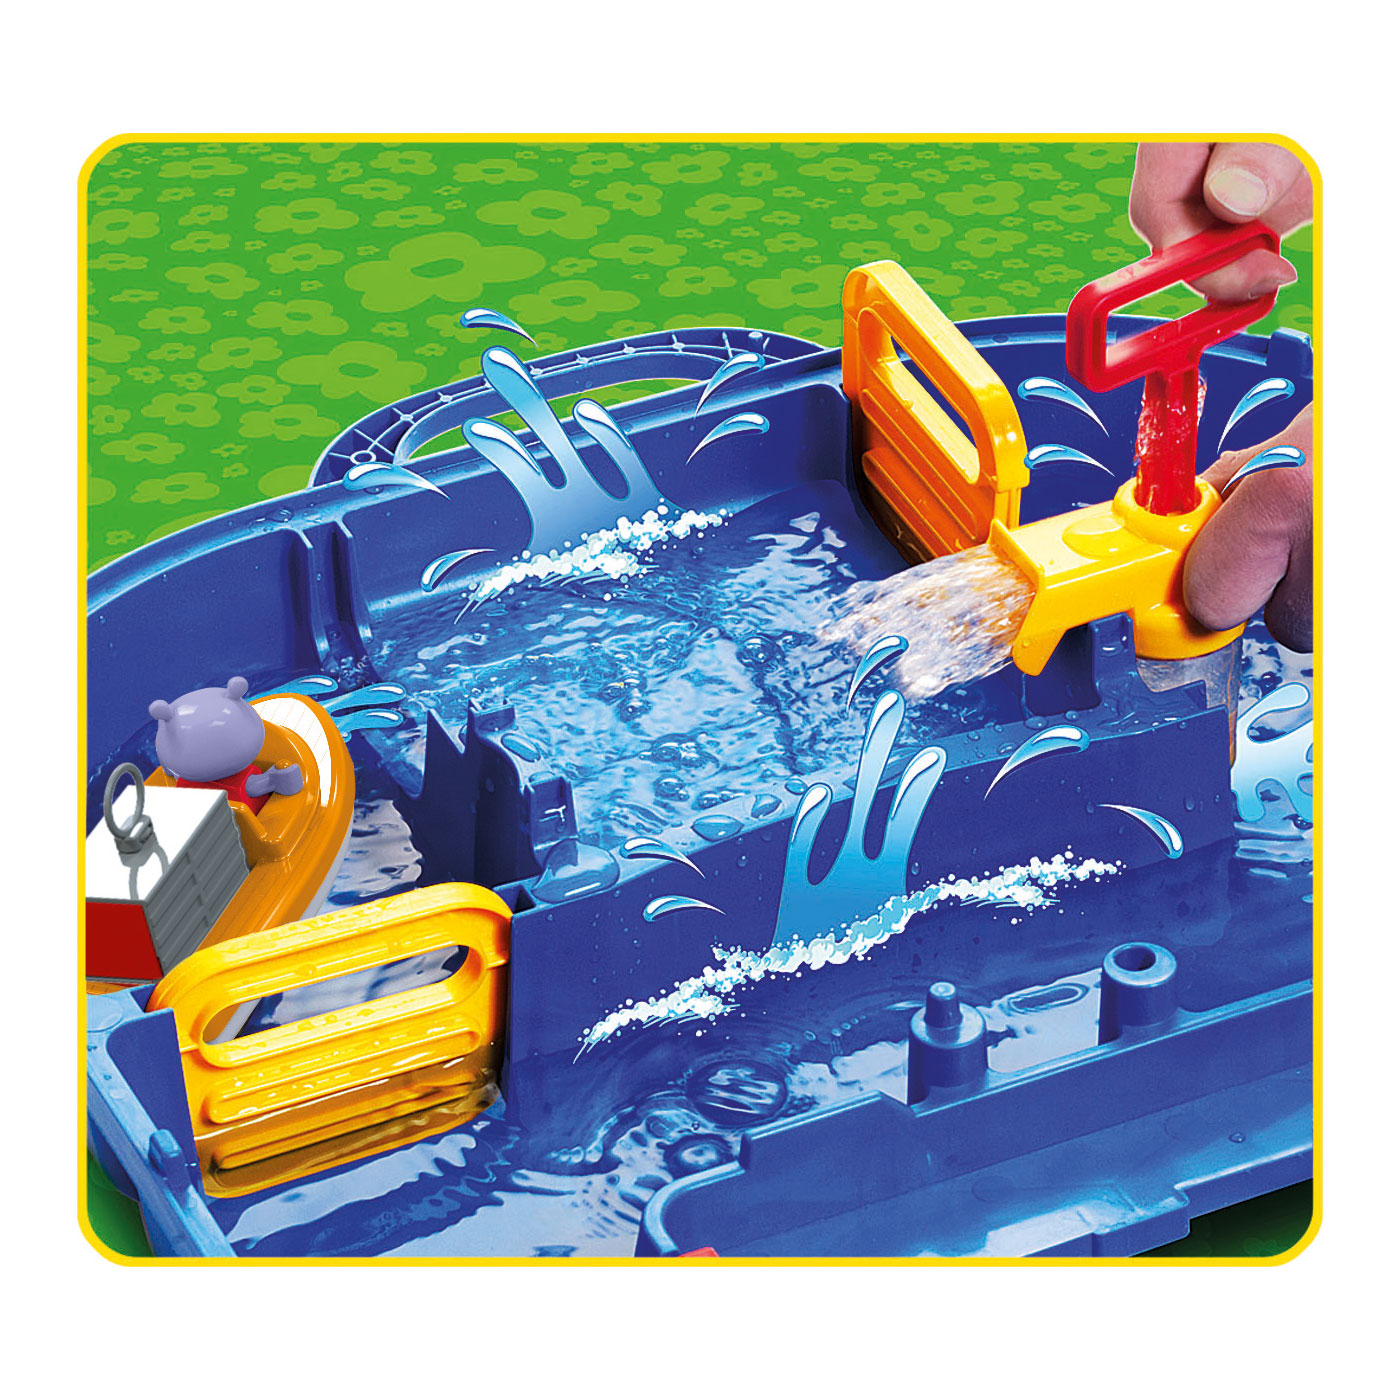 AquaPlay 1680 - Giga Set Waterbaan